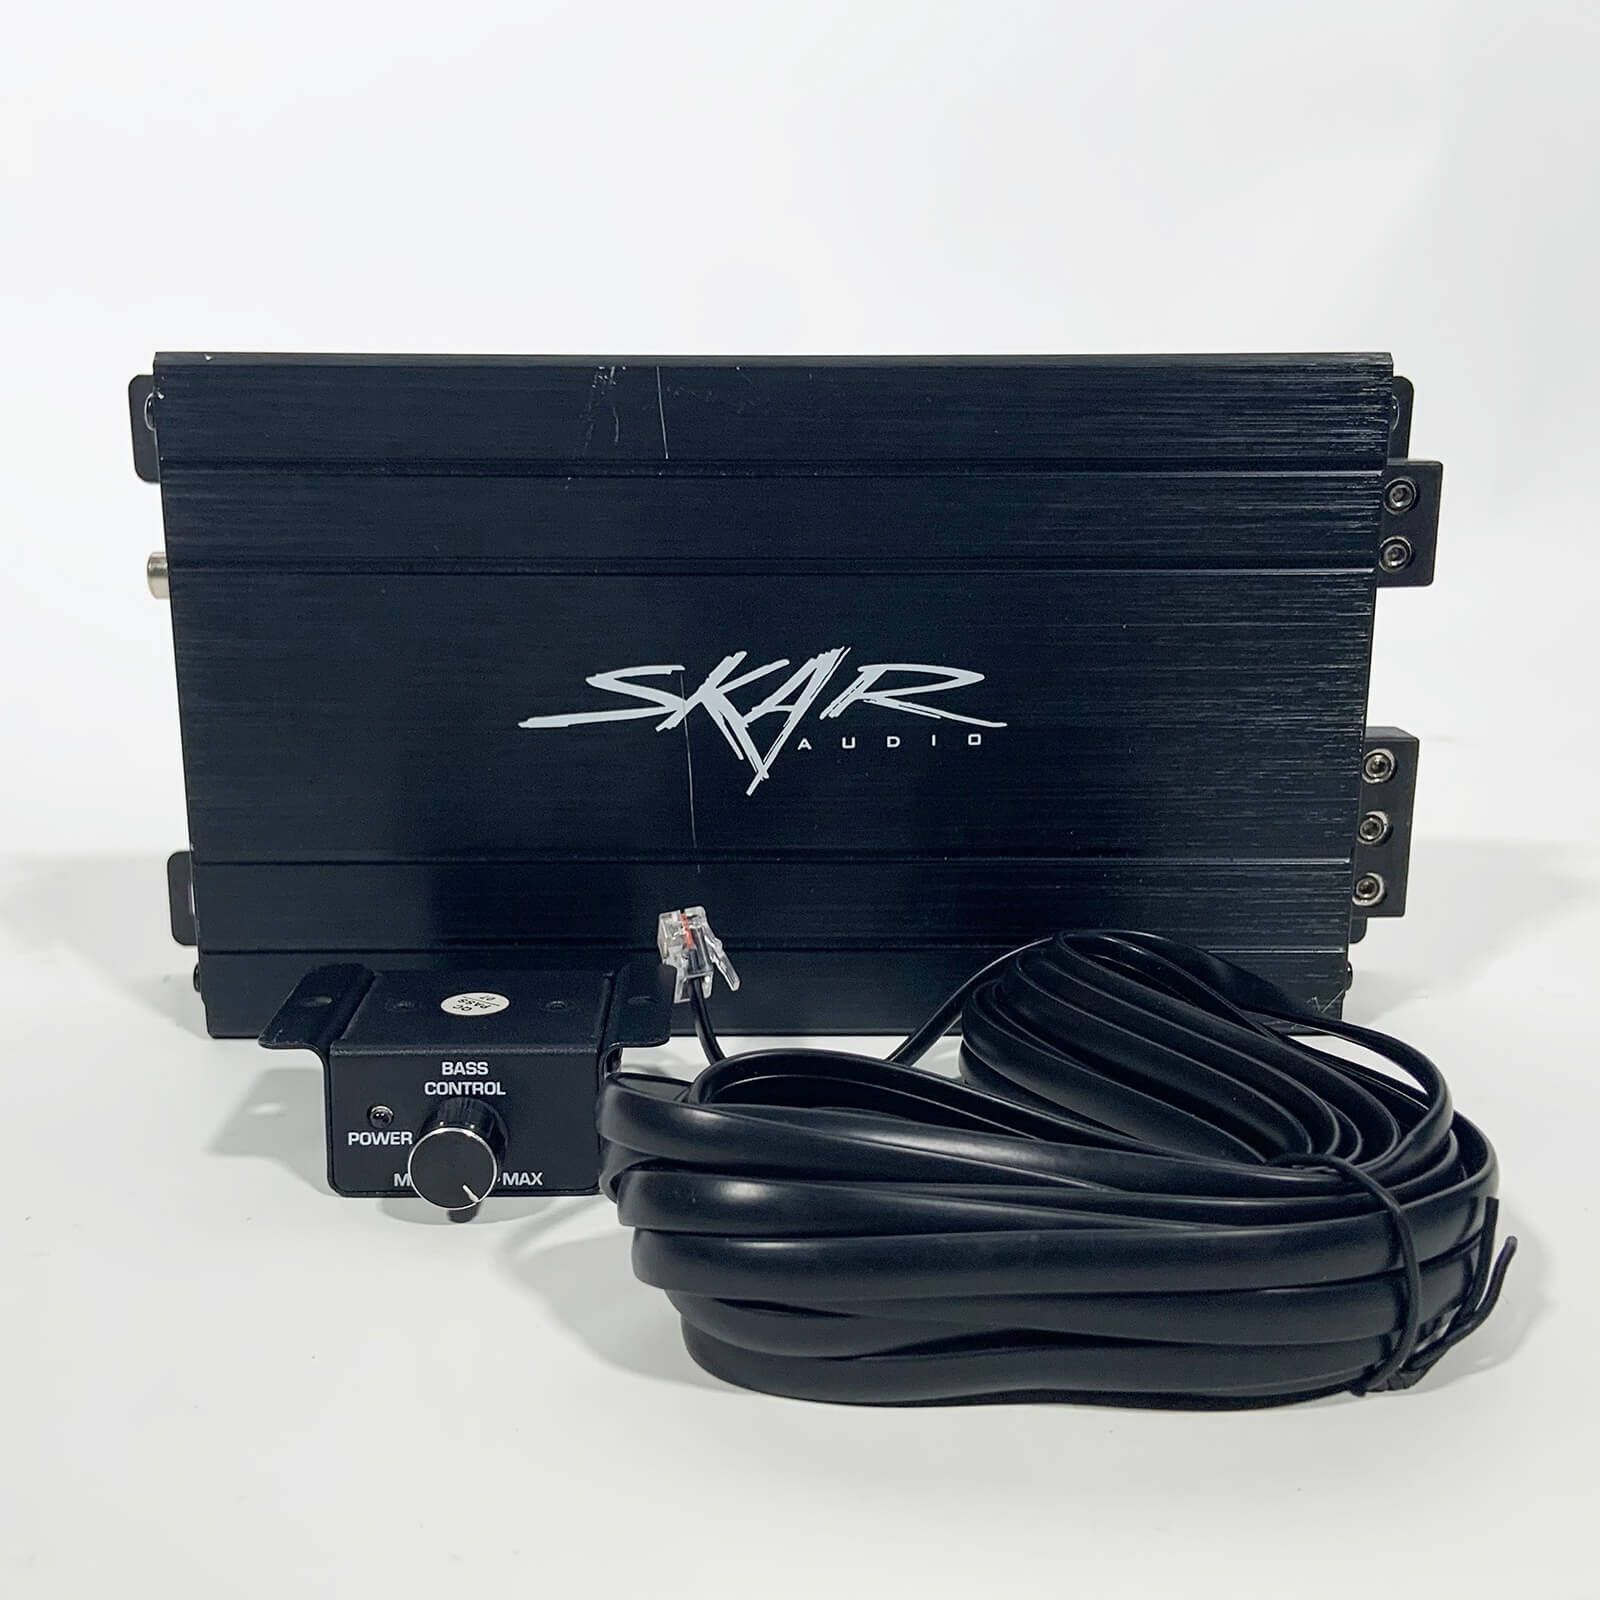 USED SKAR AUDIO SK-M5001D 500W RMS ULTRA COMPACT CLASS D MONOBLOCK CAR AMPLIFIER